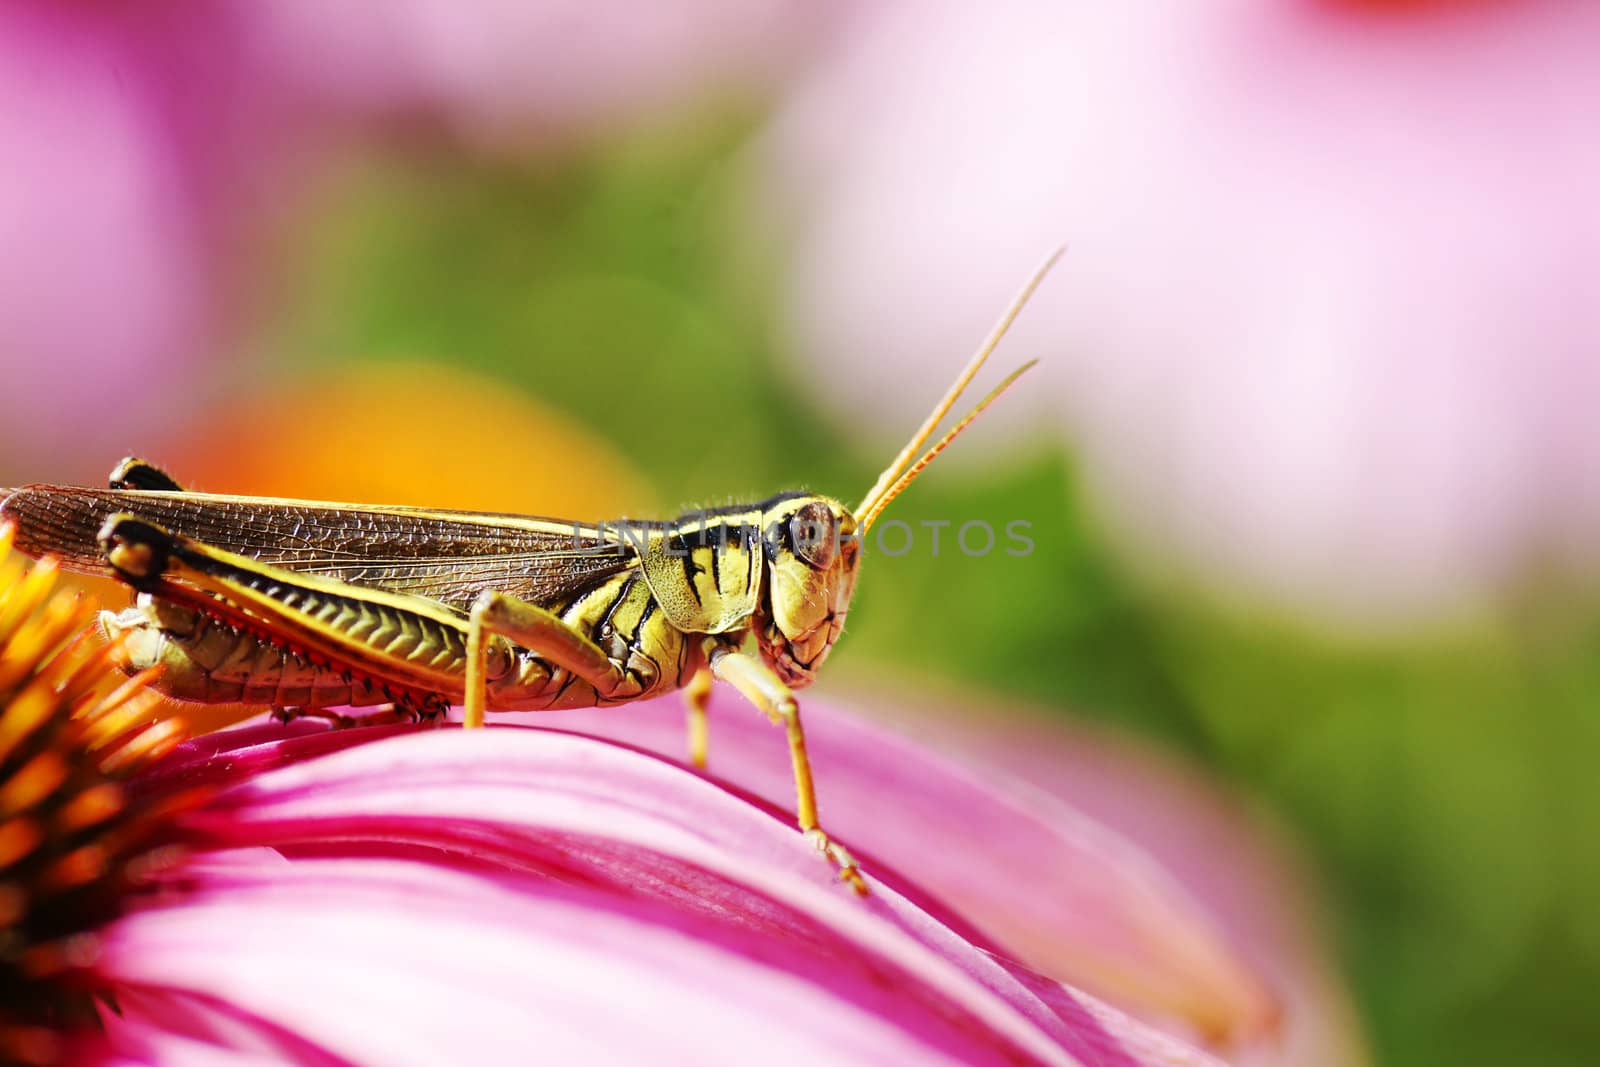 Red-legged grasshopper on pink flower by Mirage3